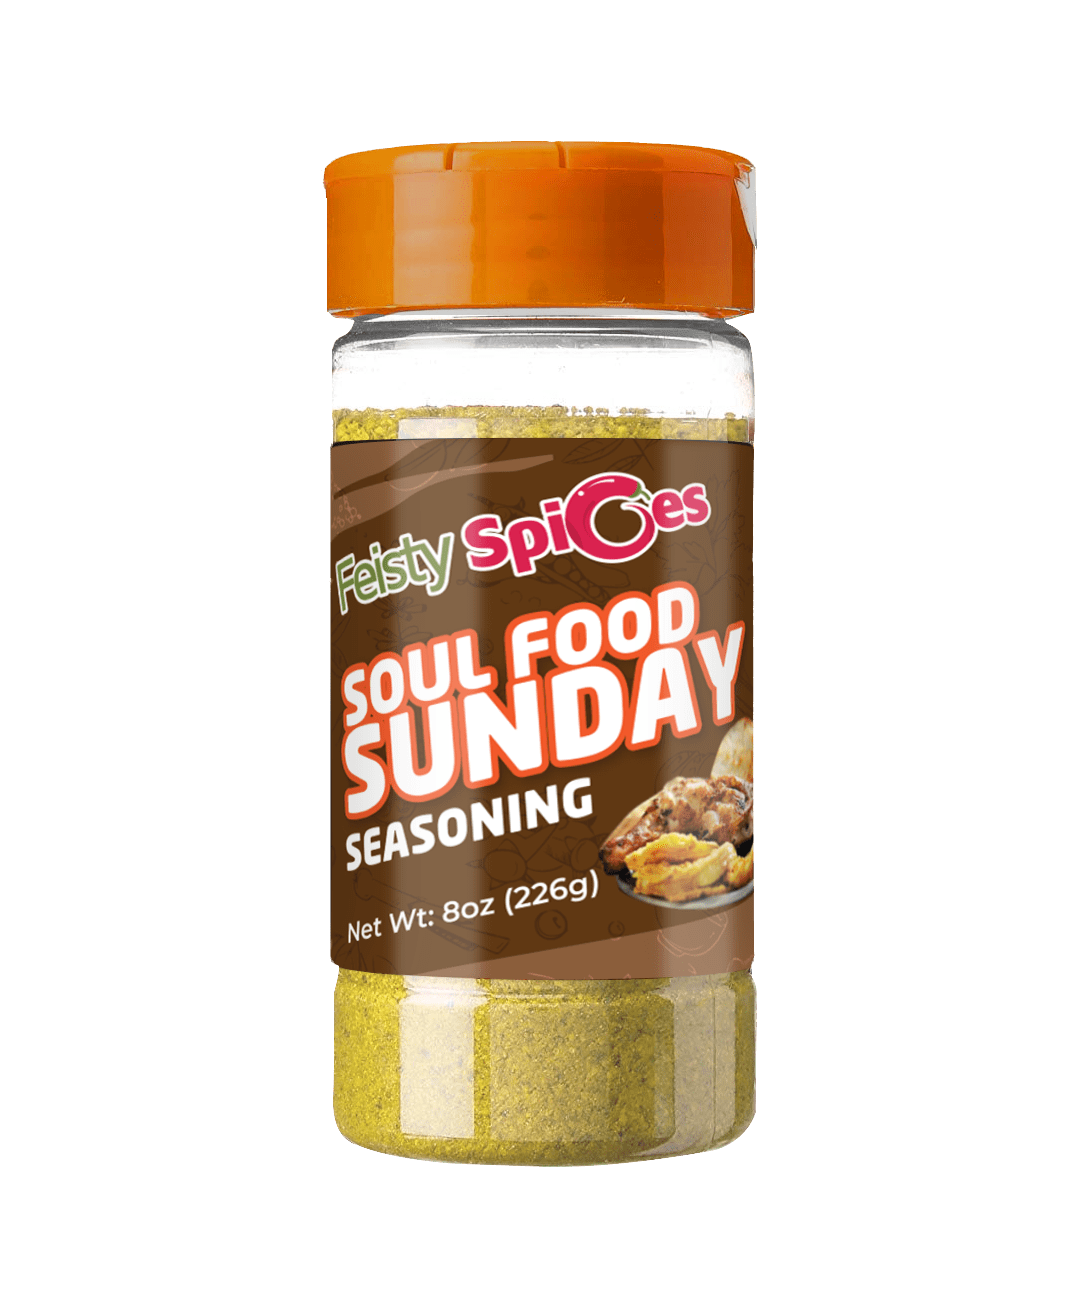 Soul Food Spice Blend - Seasonest